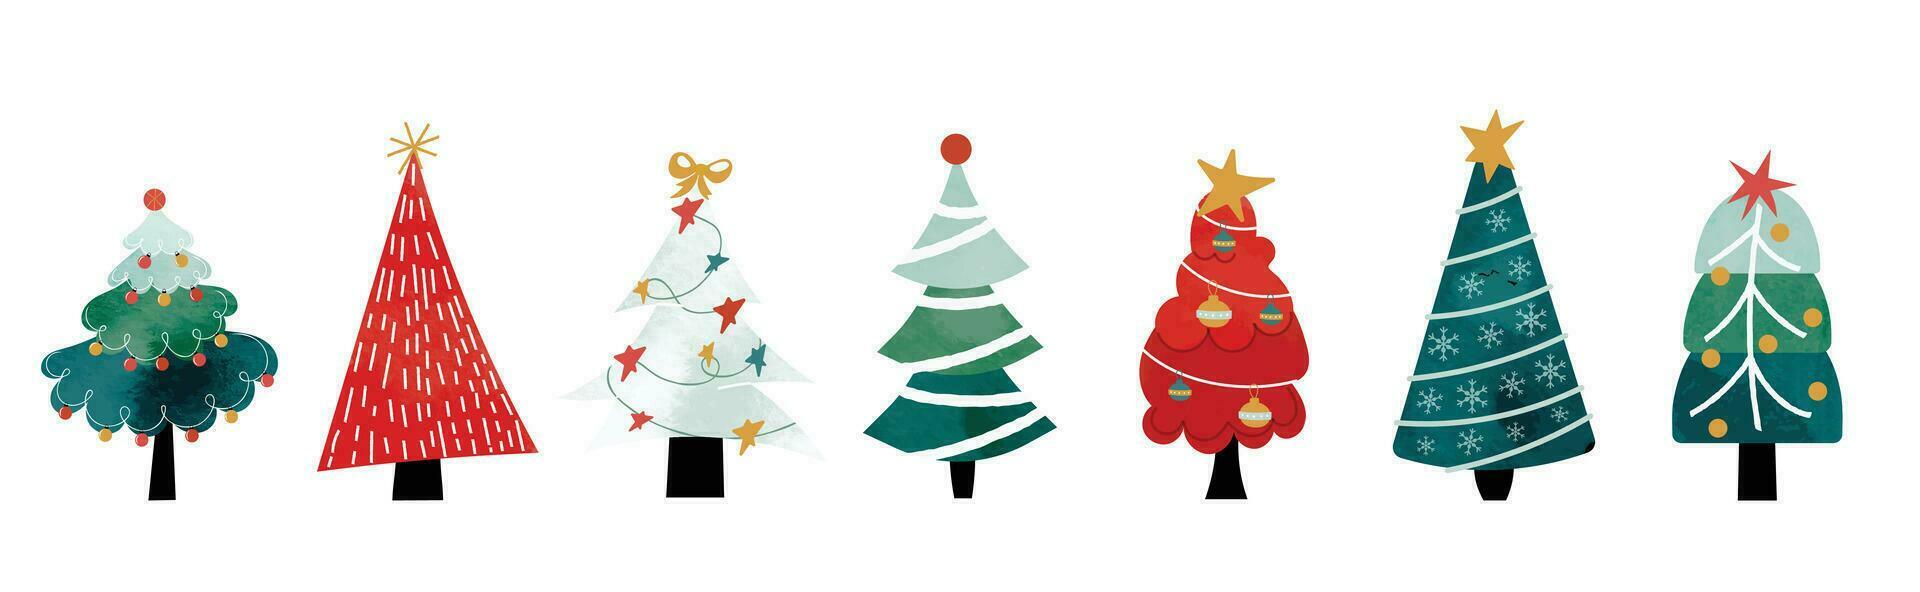 Set of watercolor decorative christmas tree vector illustration. Elements of ornamental balls, decorative light, star, ribbon, snowflake. Design for card, comic, print, poster, banner, decoration.